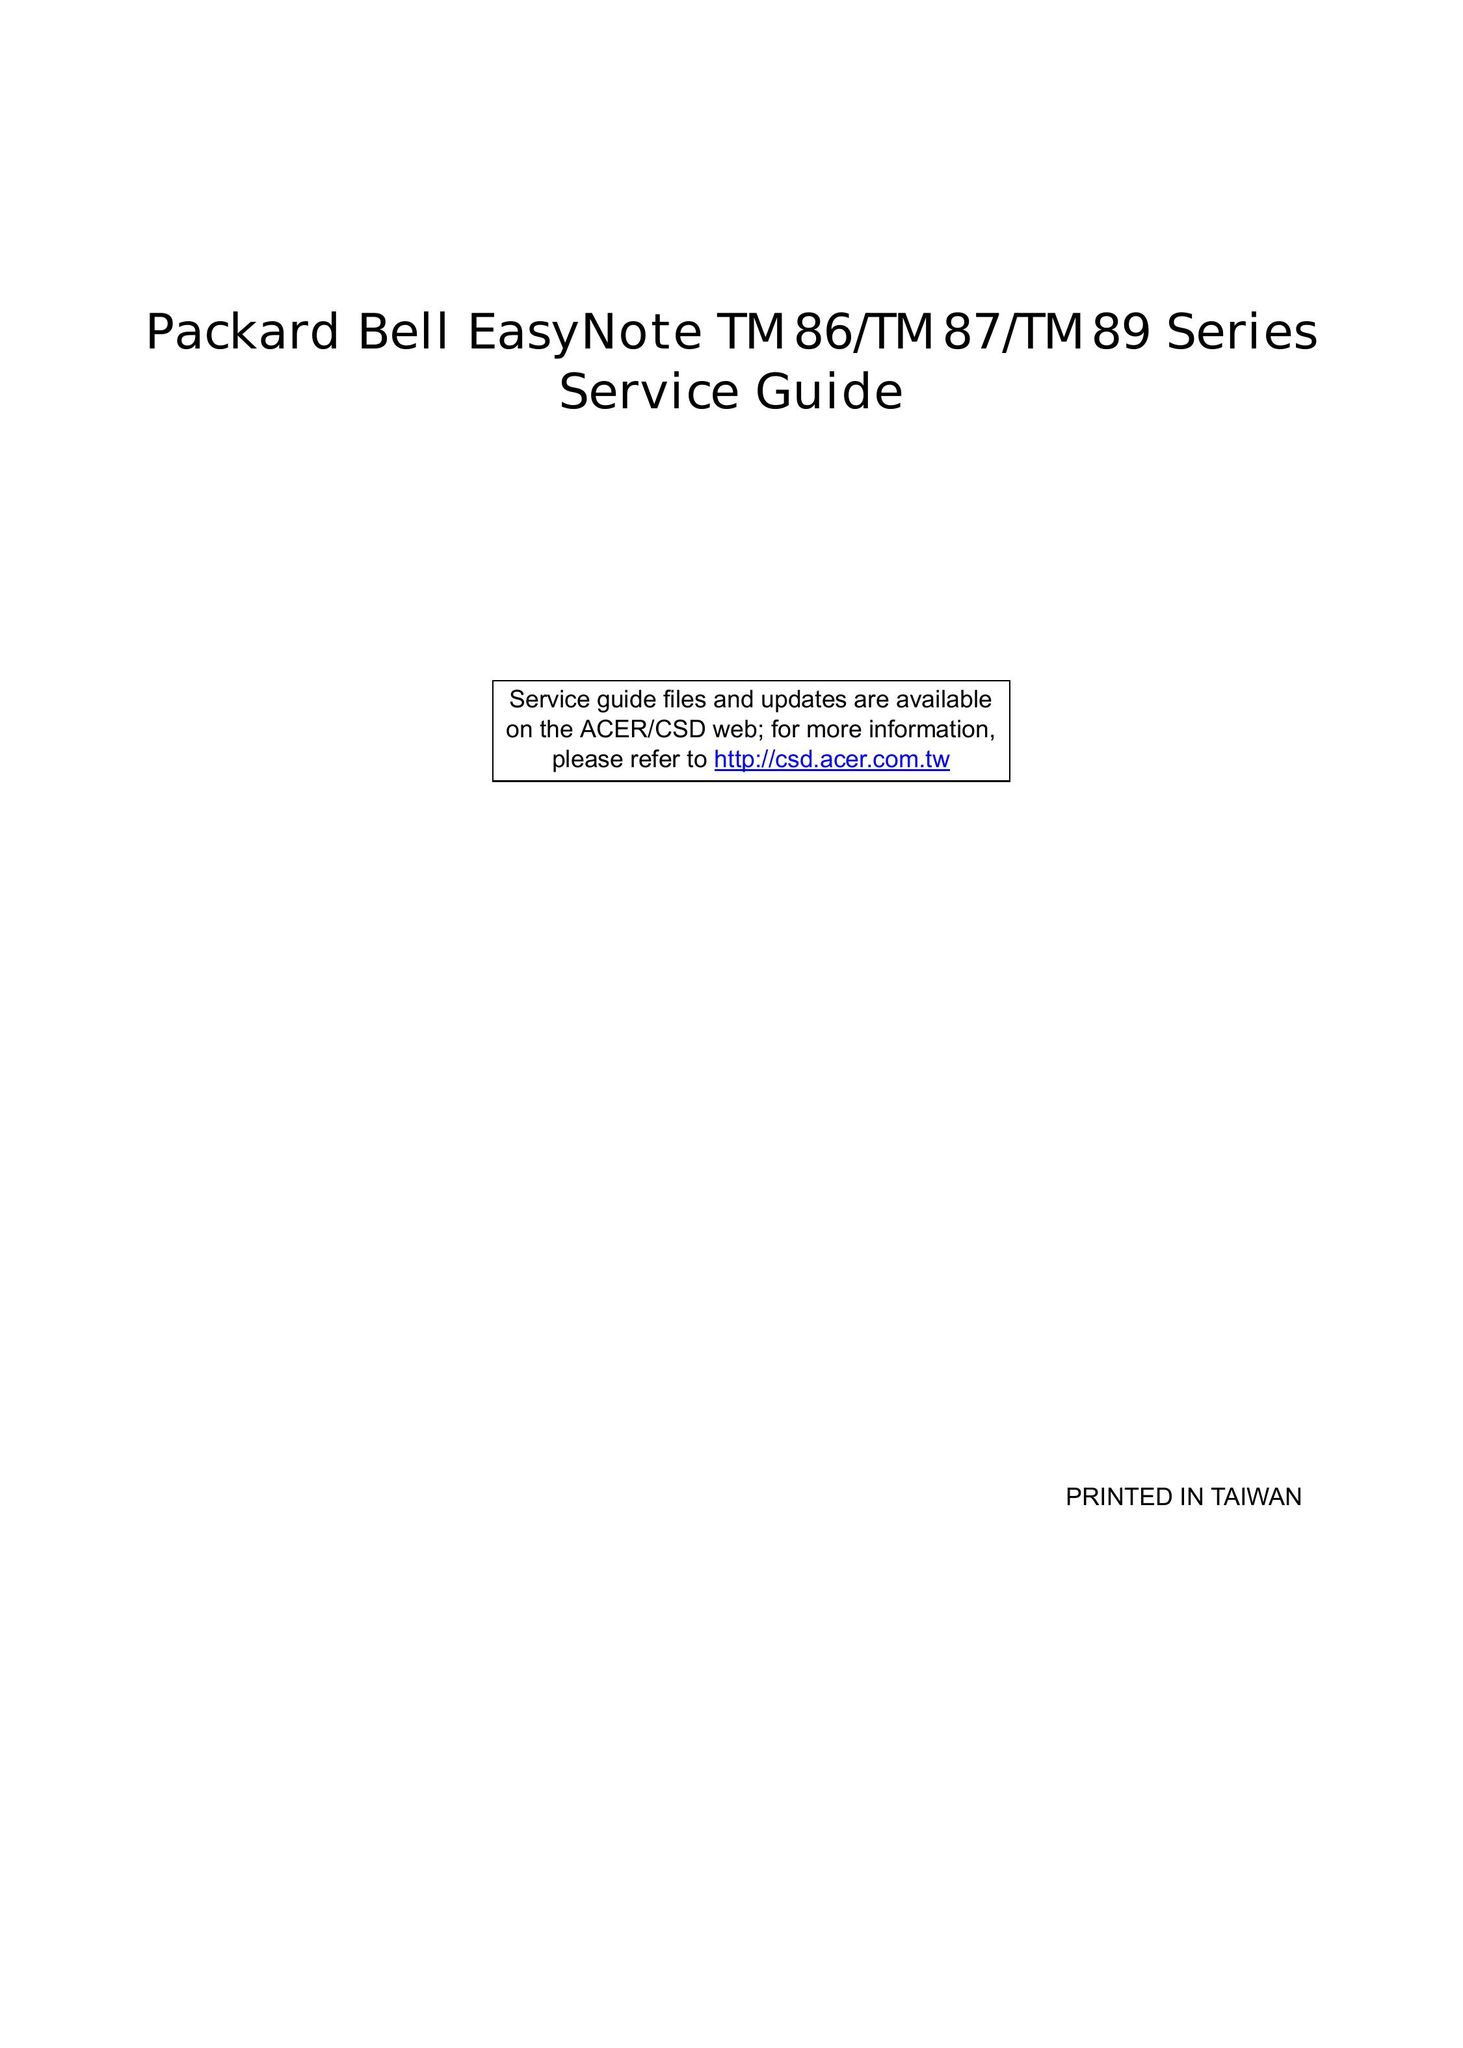 Packard Bell TM87 Laptop User Manual